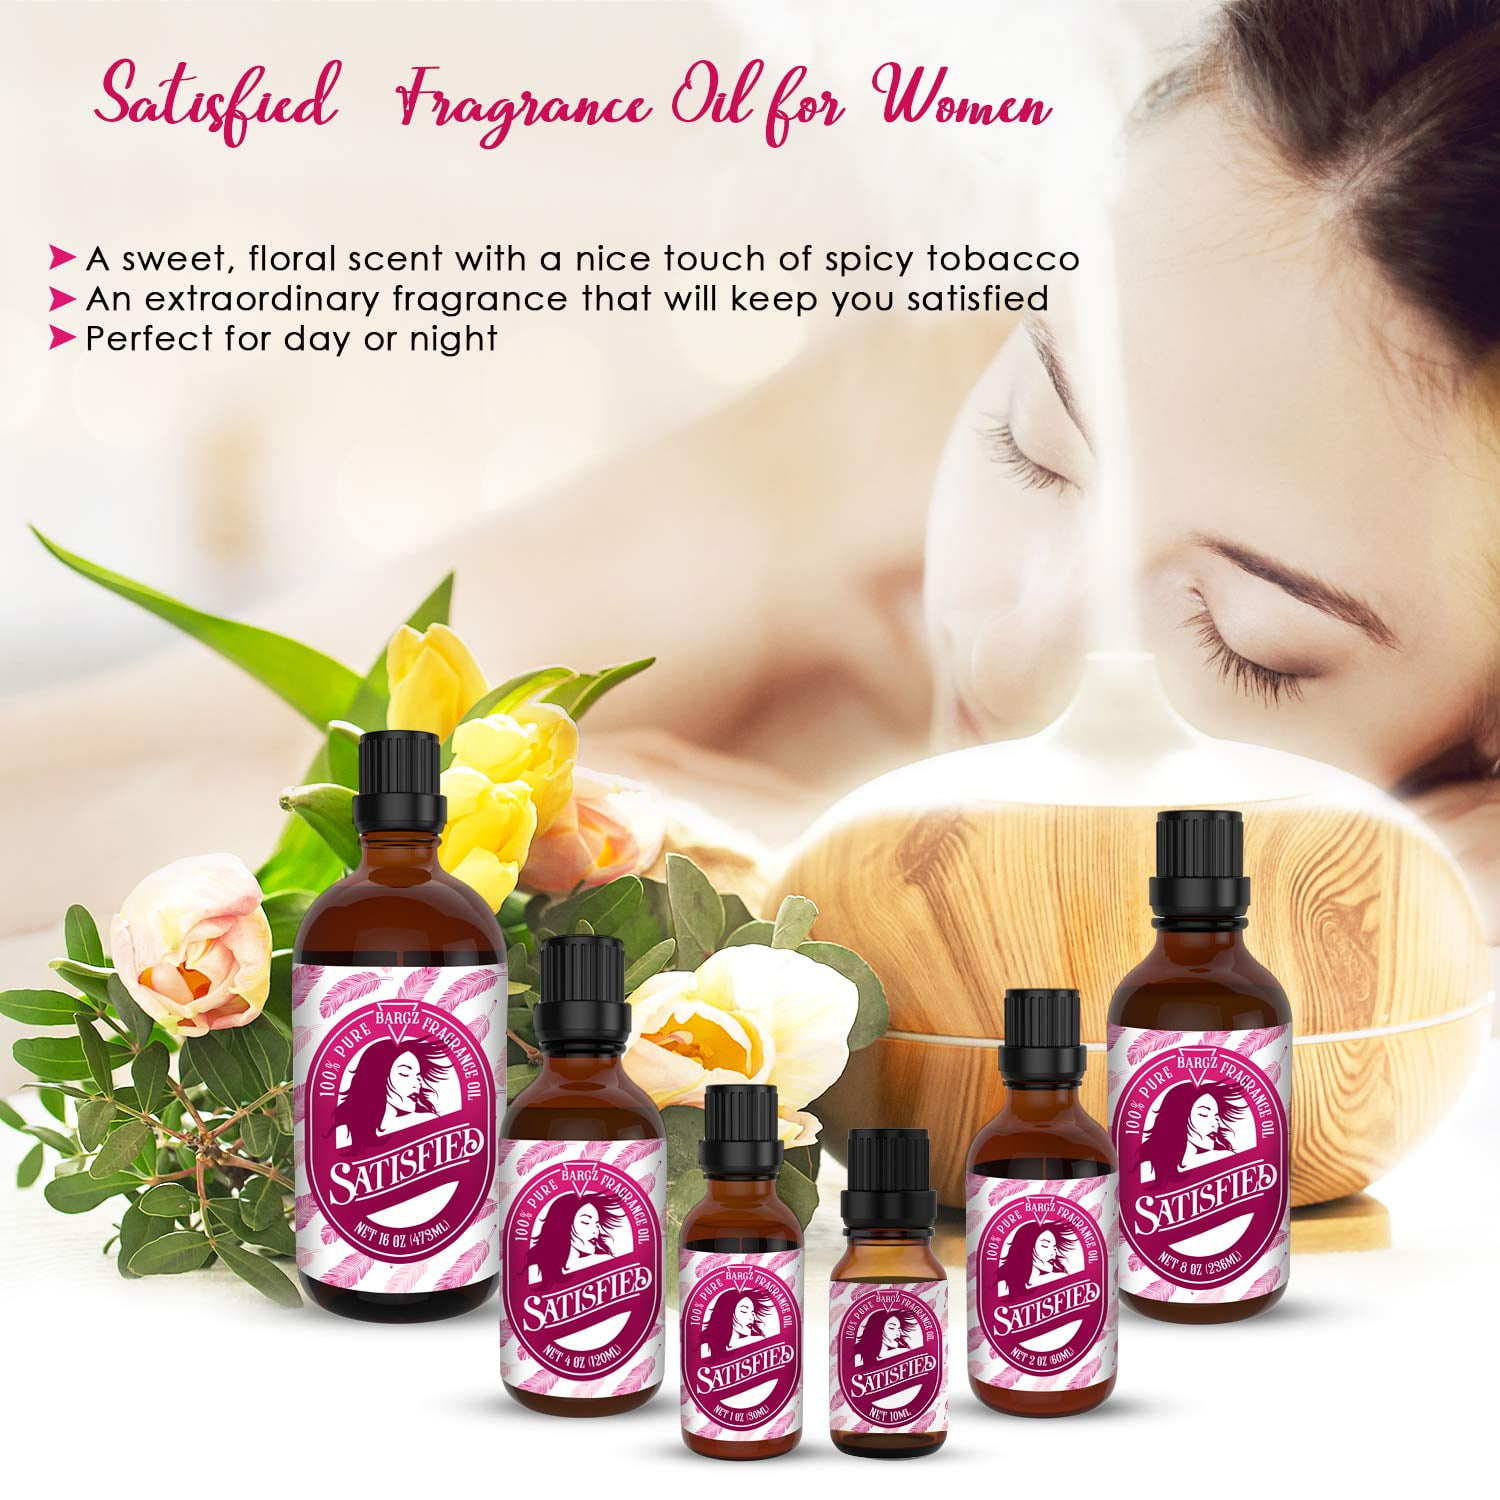 Addt'l Women's Fragrance Oils